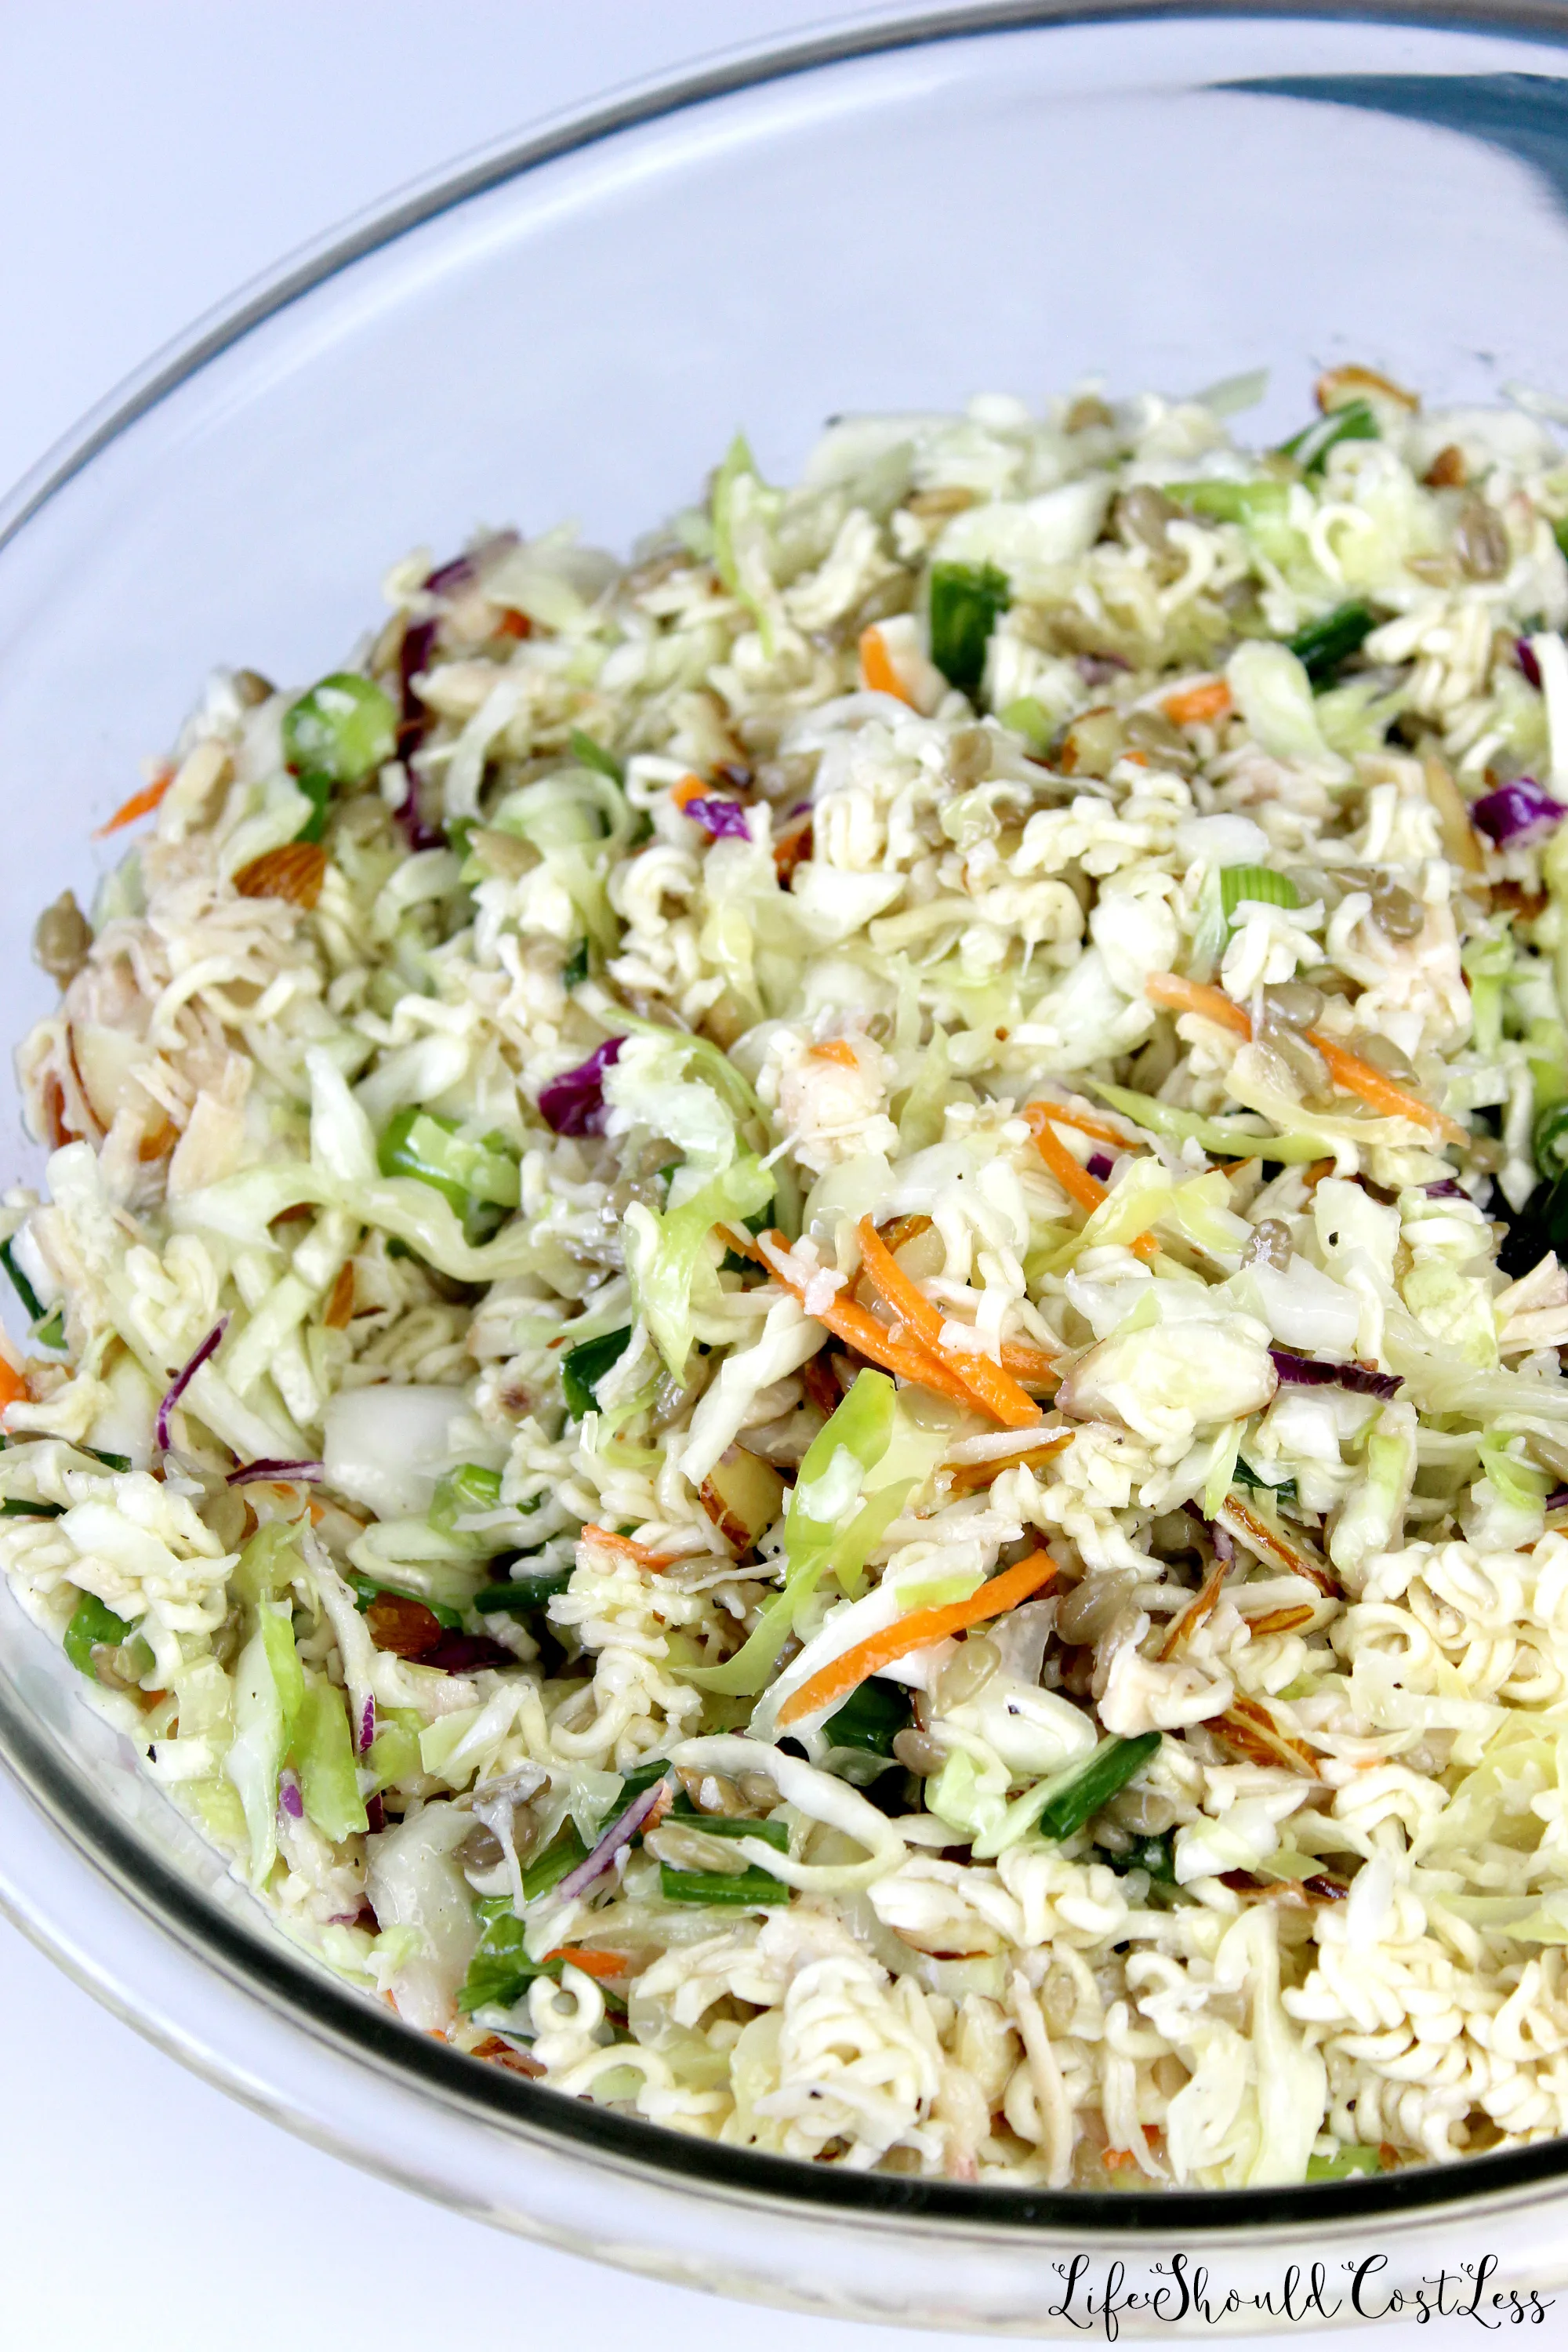 Top Ramen Chicken Salad Recipe.